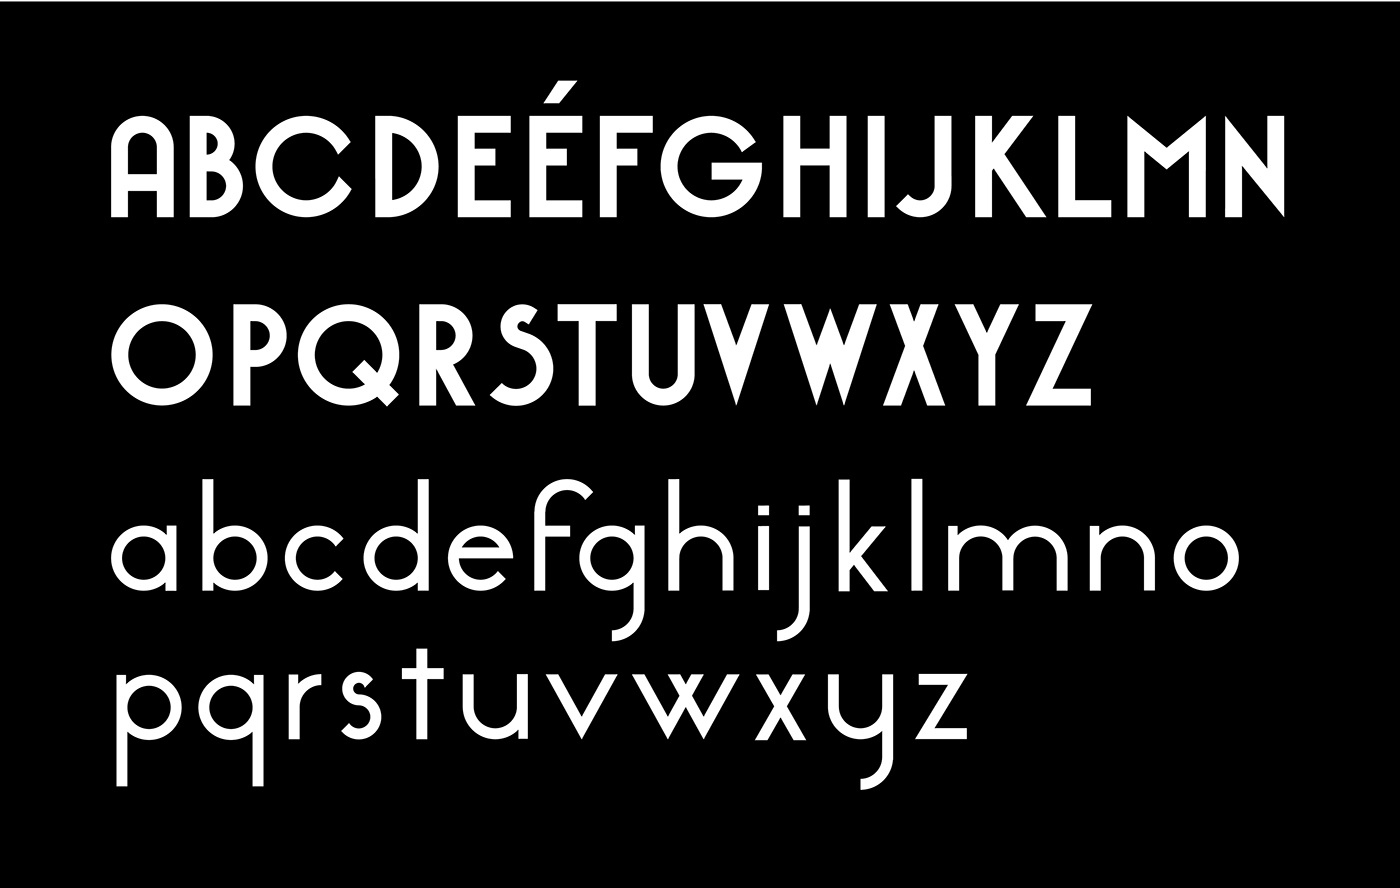 font typo Acme studio Paris Typographie art deco graphisme Typeface identity letters alphabet tipographia poster graphic